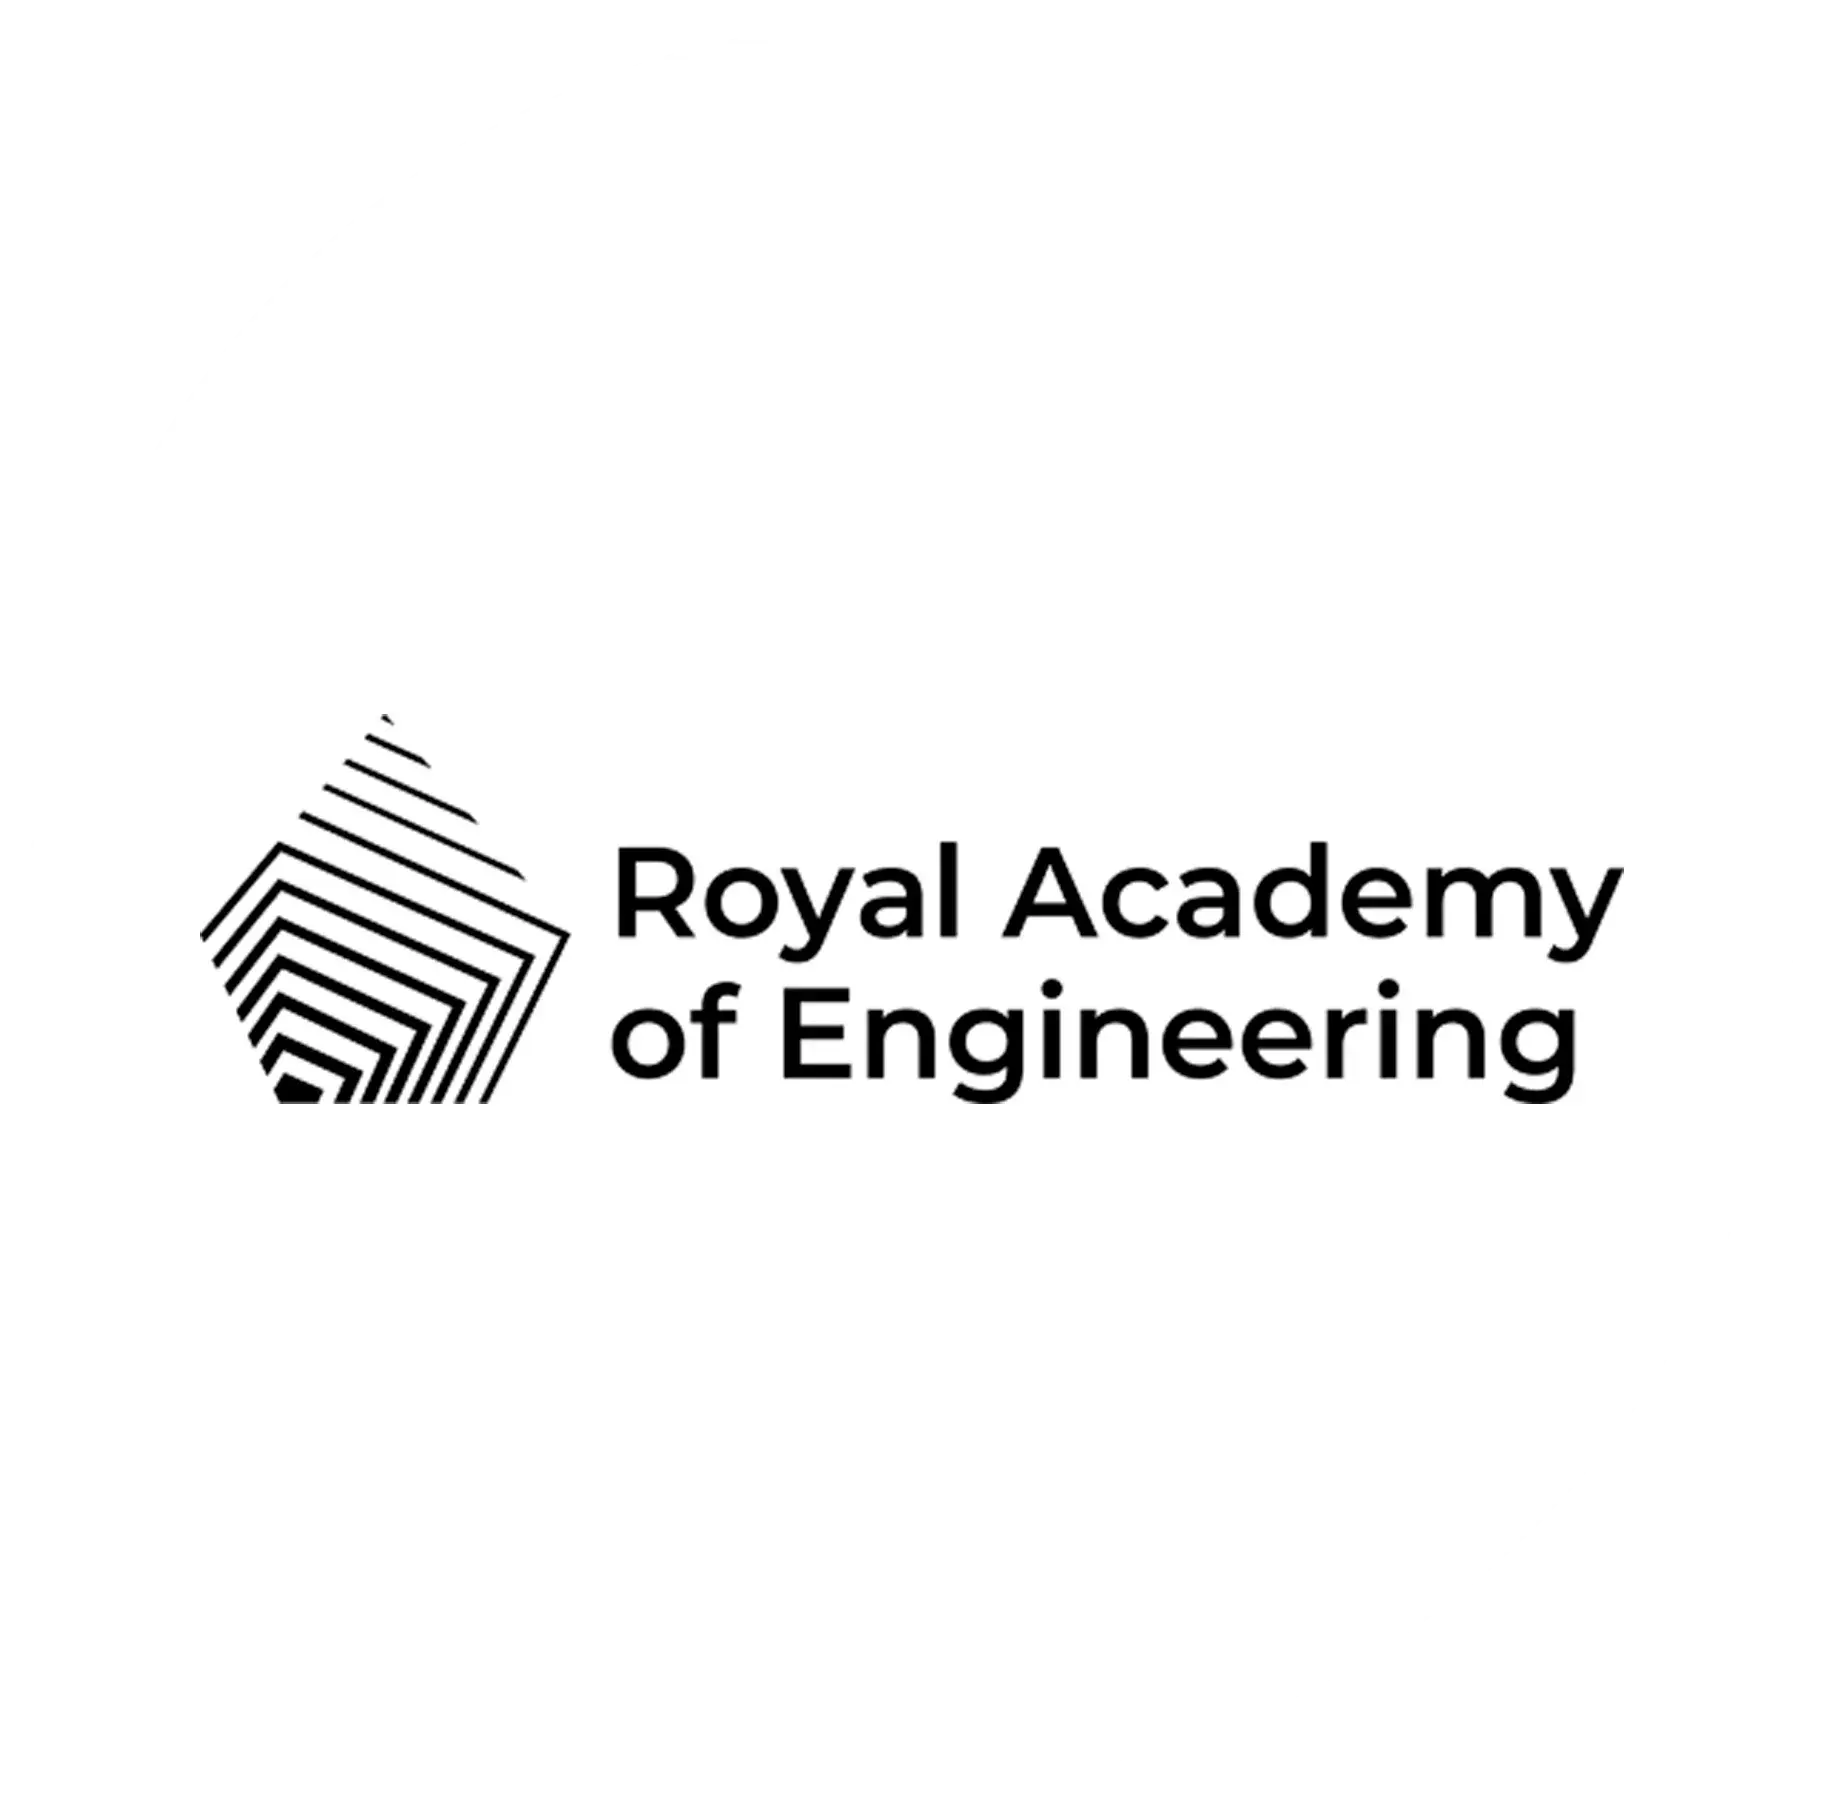 6. Royal Academy of Engineering